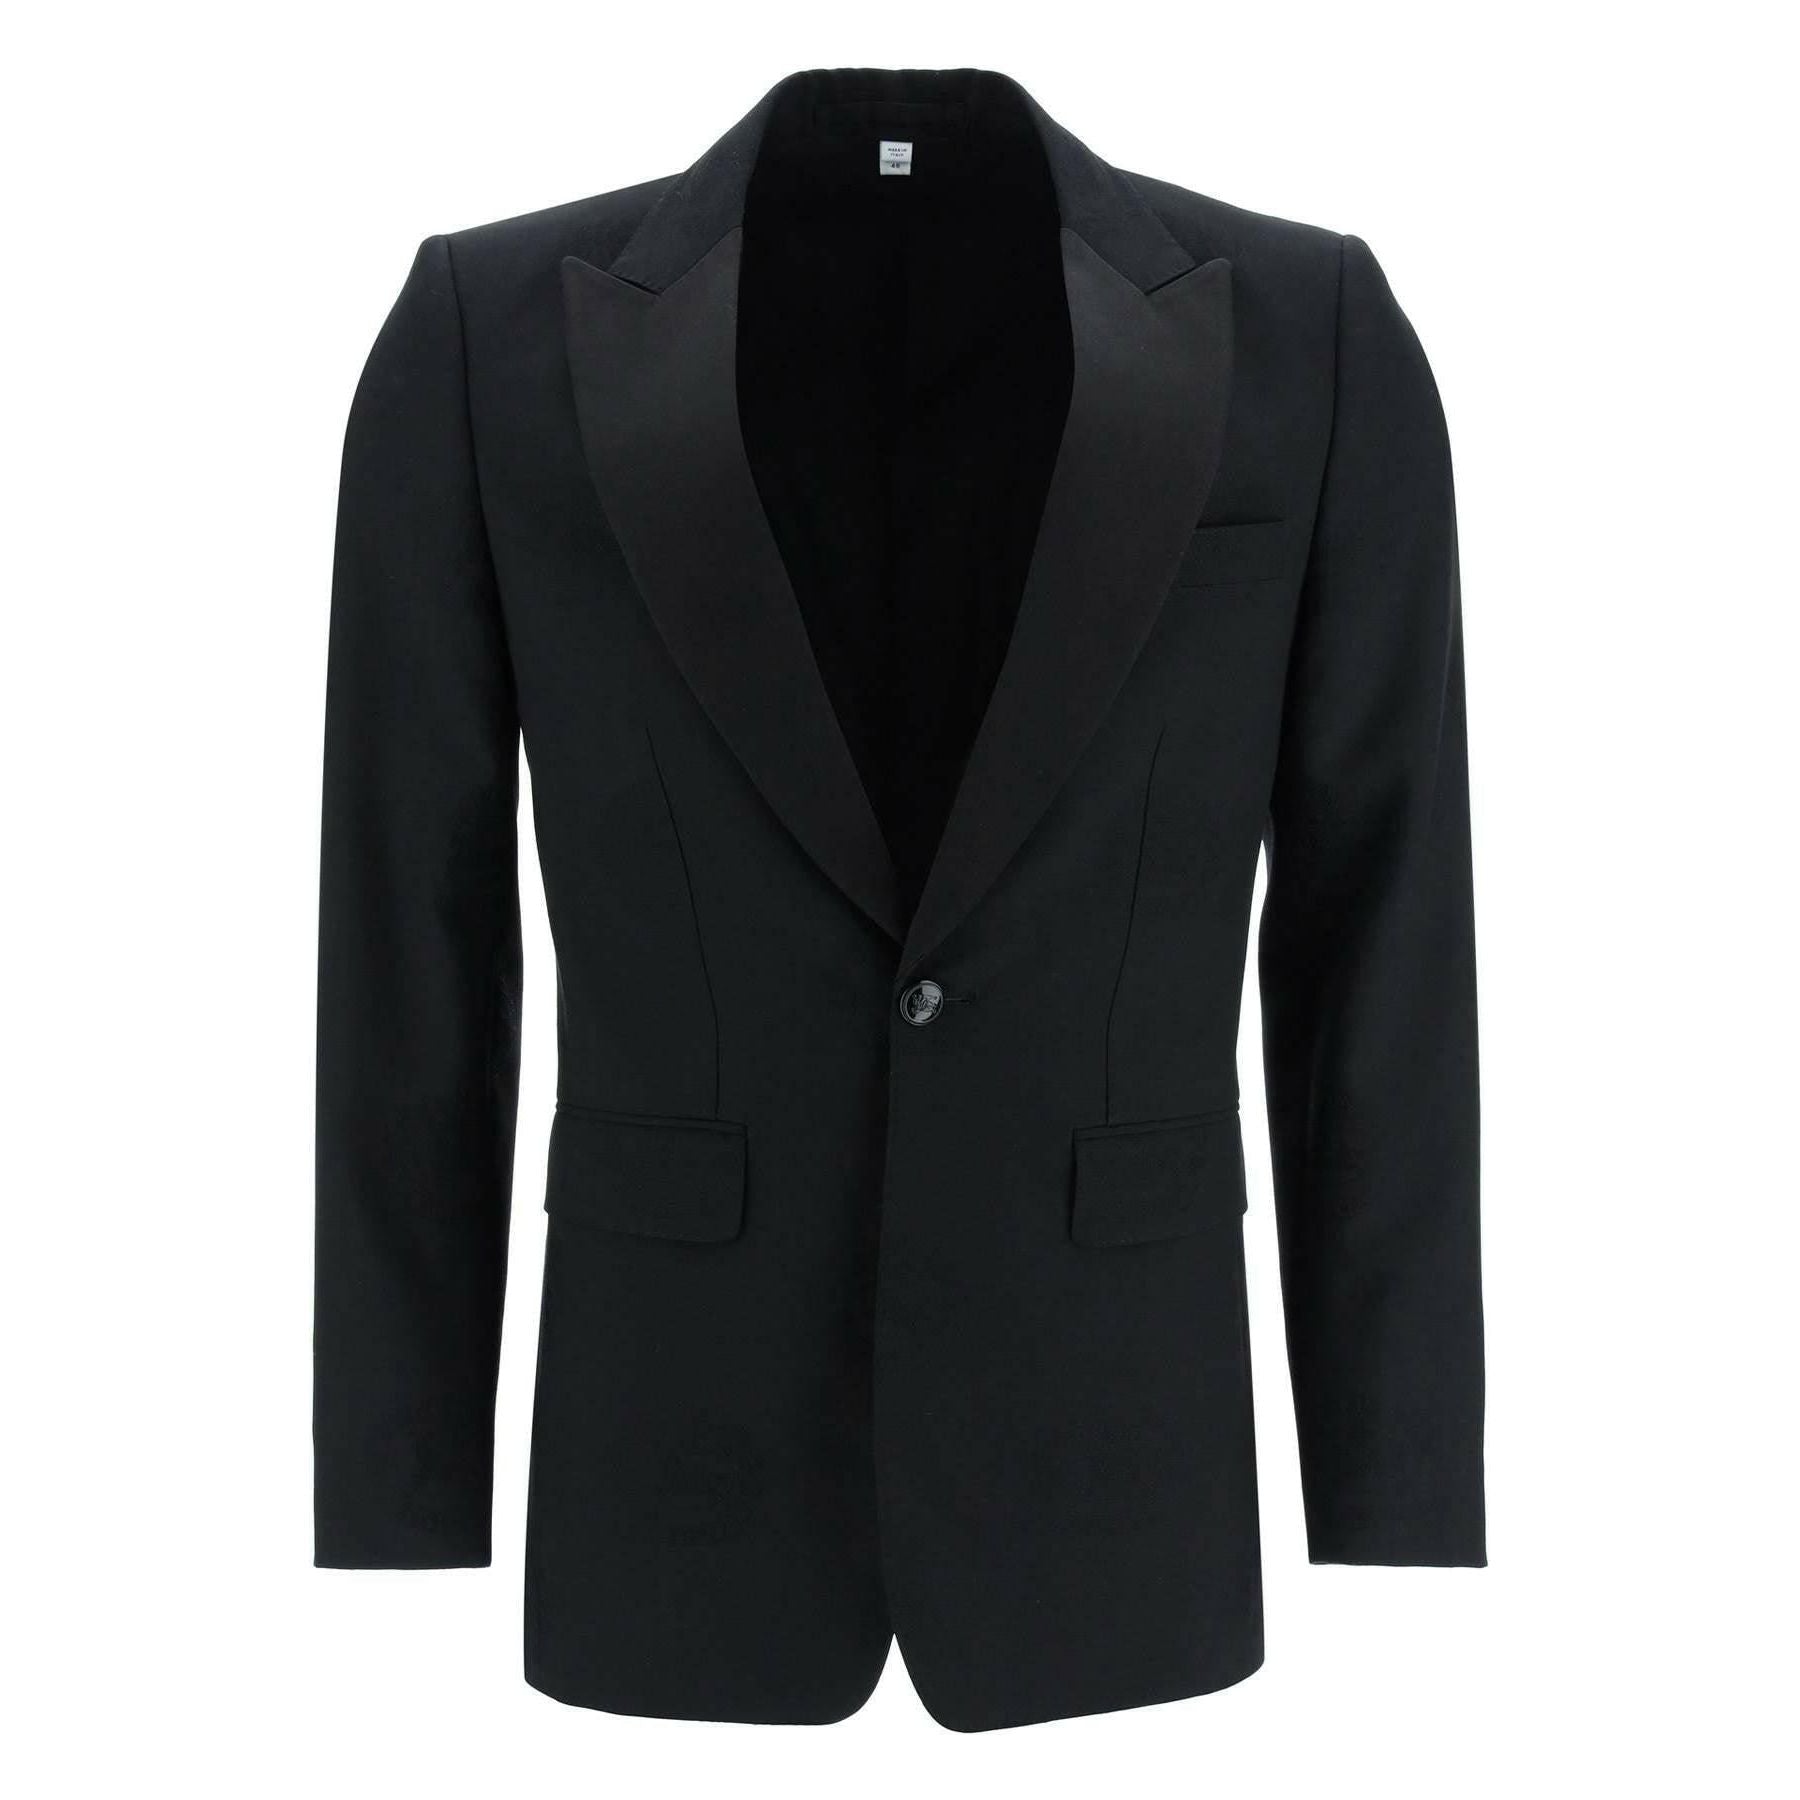 Tuxedo Jacket With Jacquard Details BURBERRY JOHN JULIA.